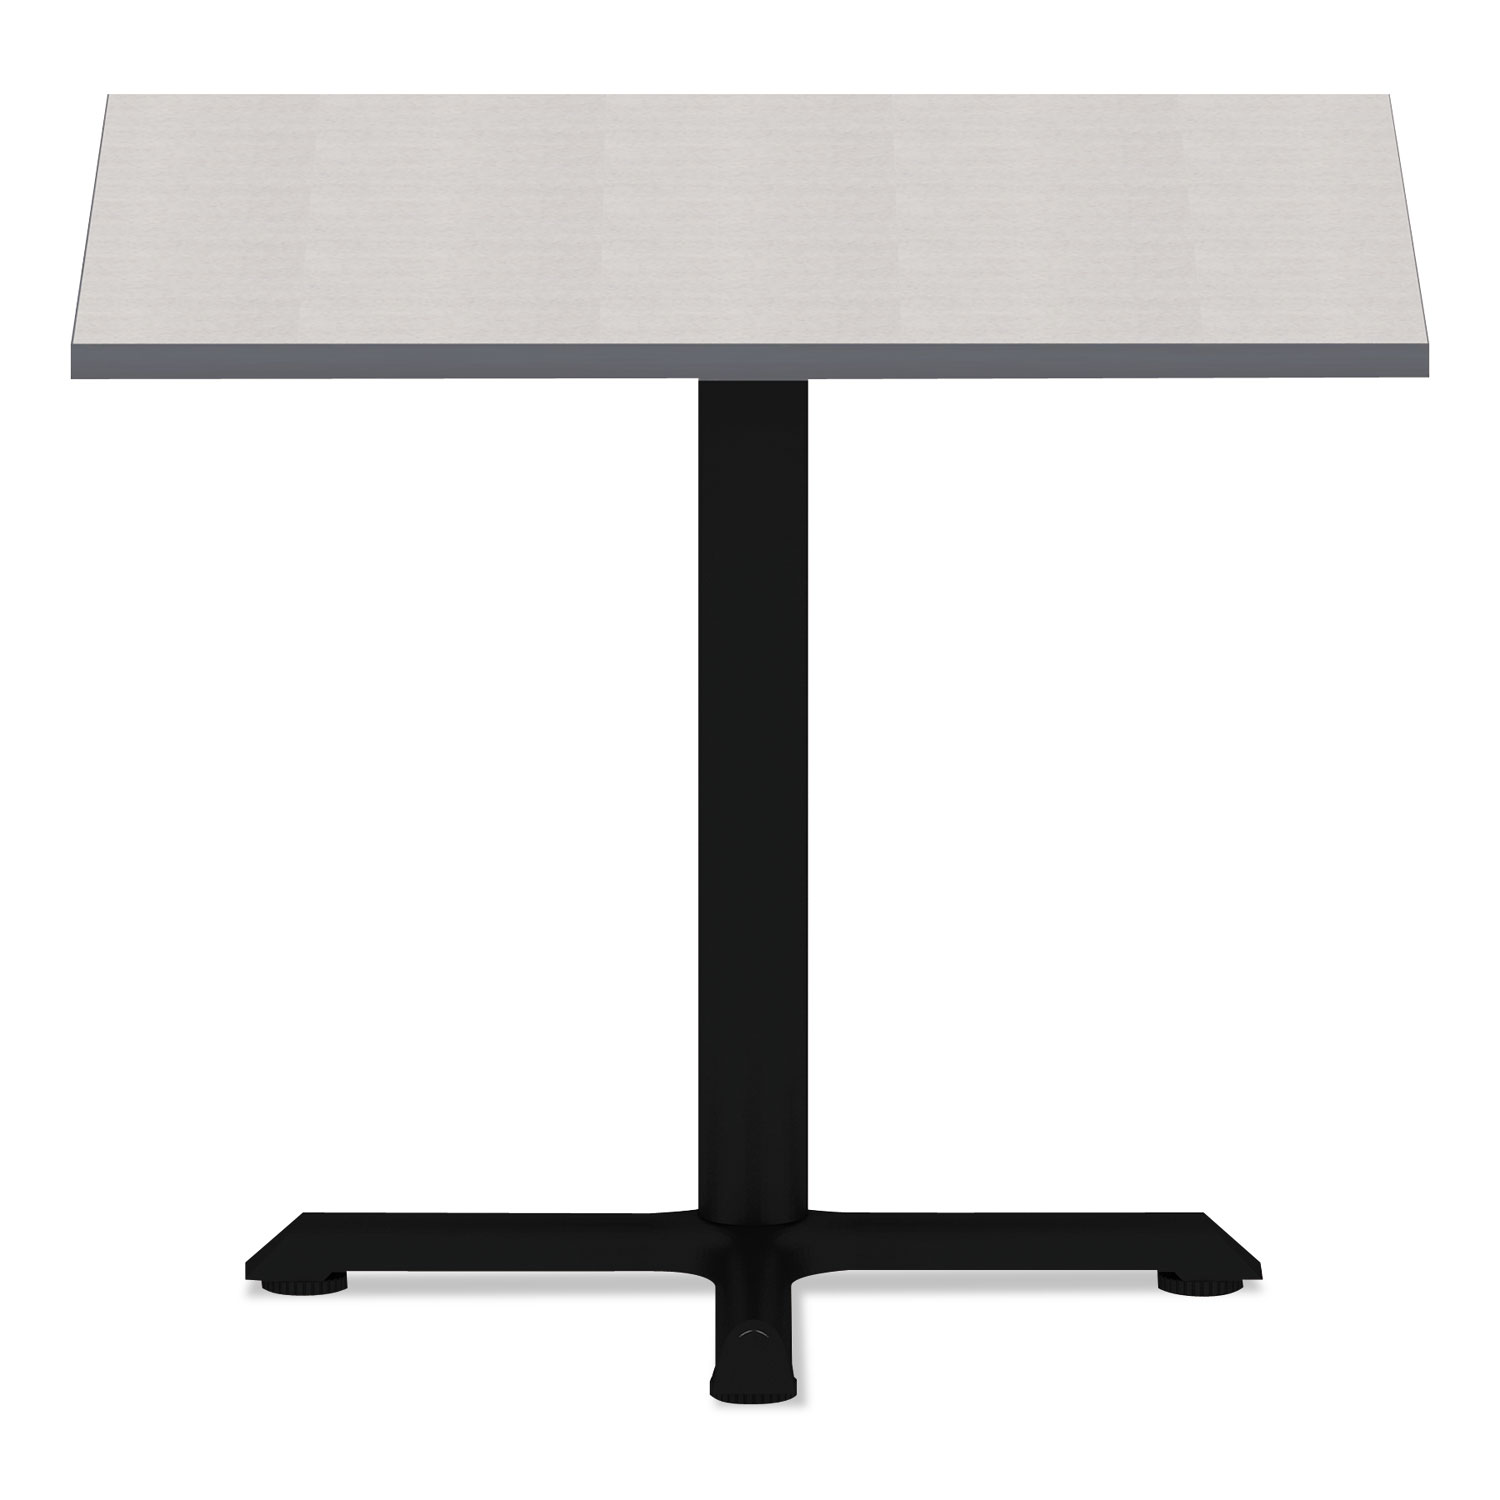 Reversible Laminate Table Top, Square, 35 1/2 x 35 1/2, White/Gray